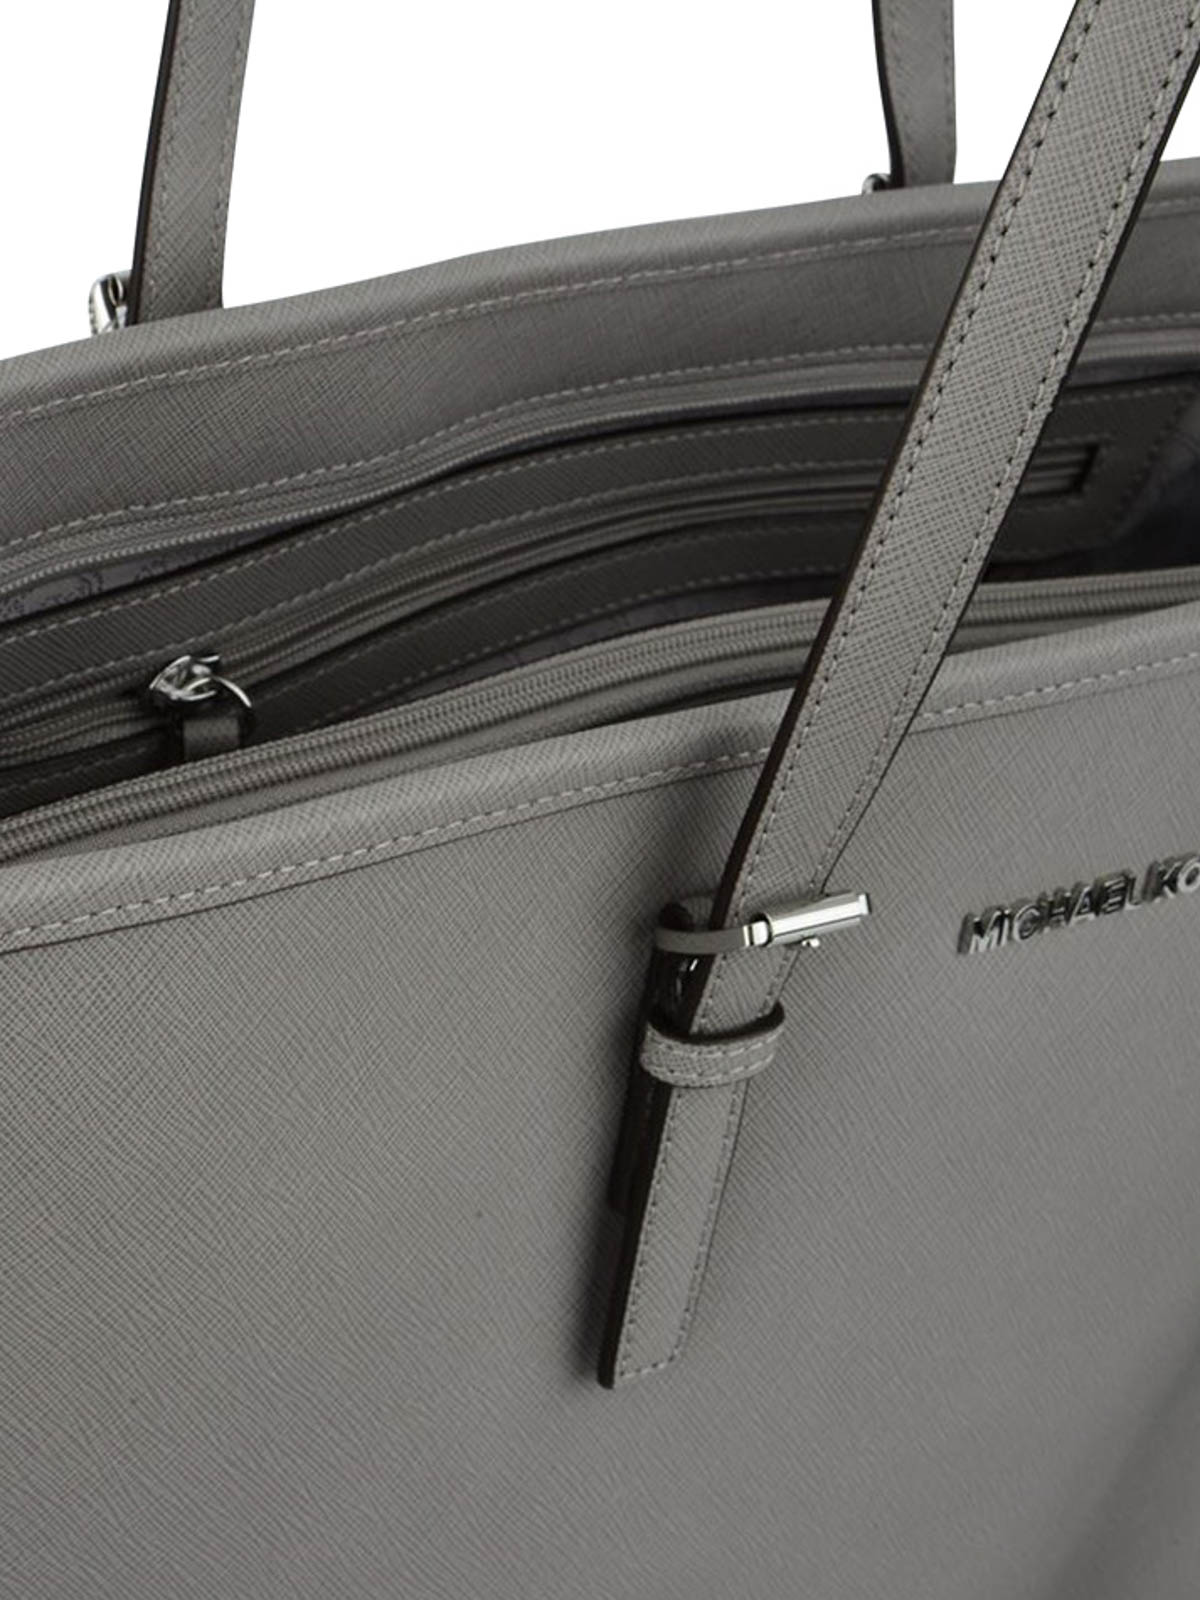 Buy the Michael Kors Jet Set Gray Saffiano Leather Travel Large Tote Bag